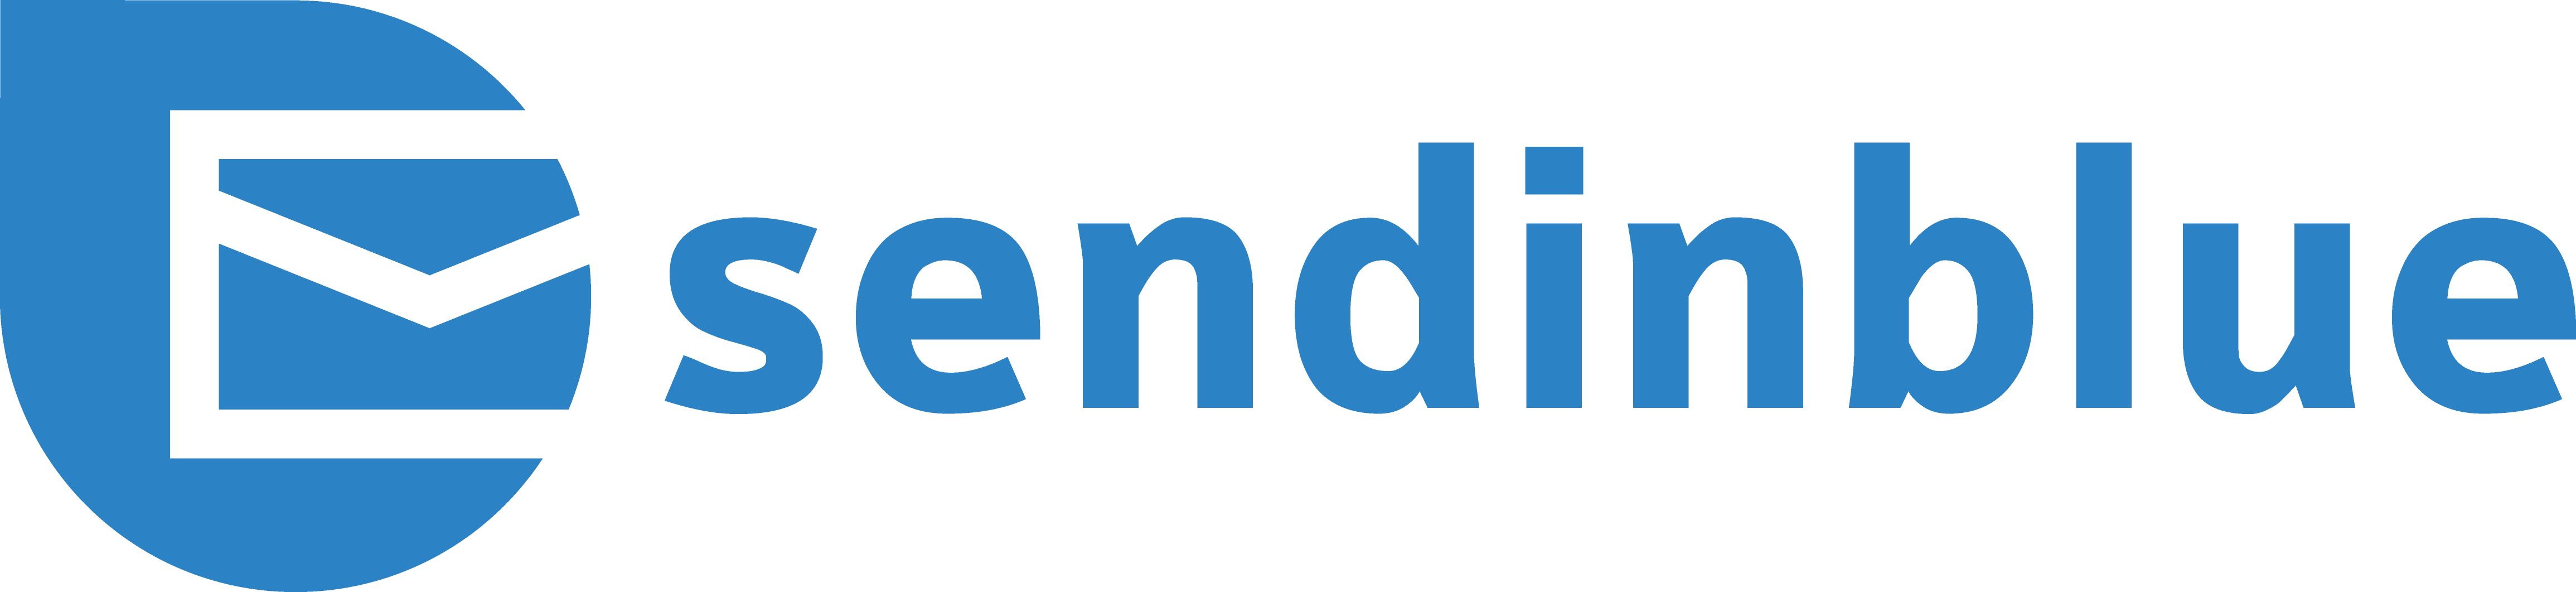 Send Logo - File:SendinBlue logo.png - Wikimedia Commons